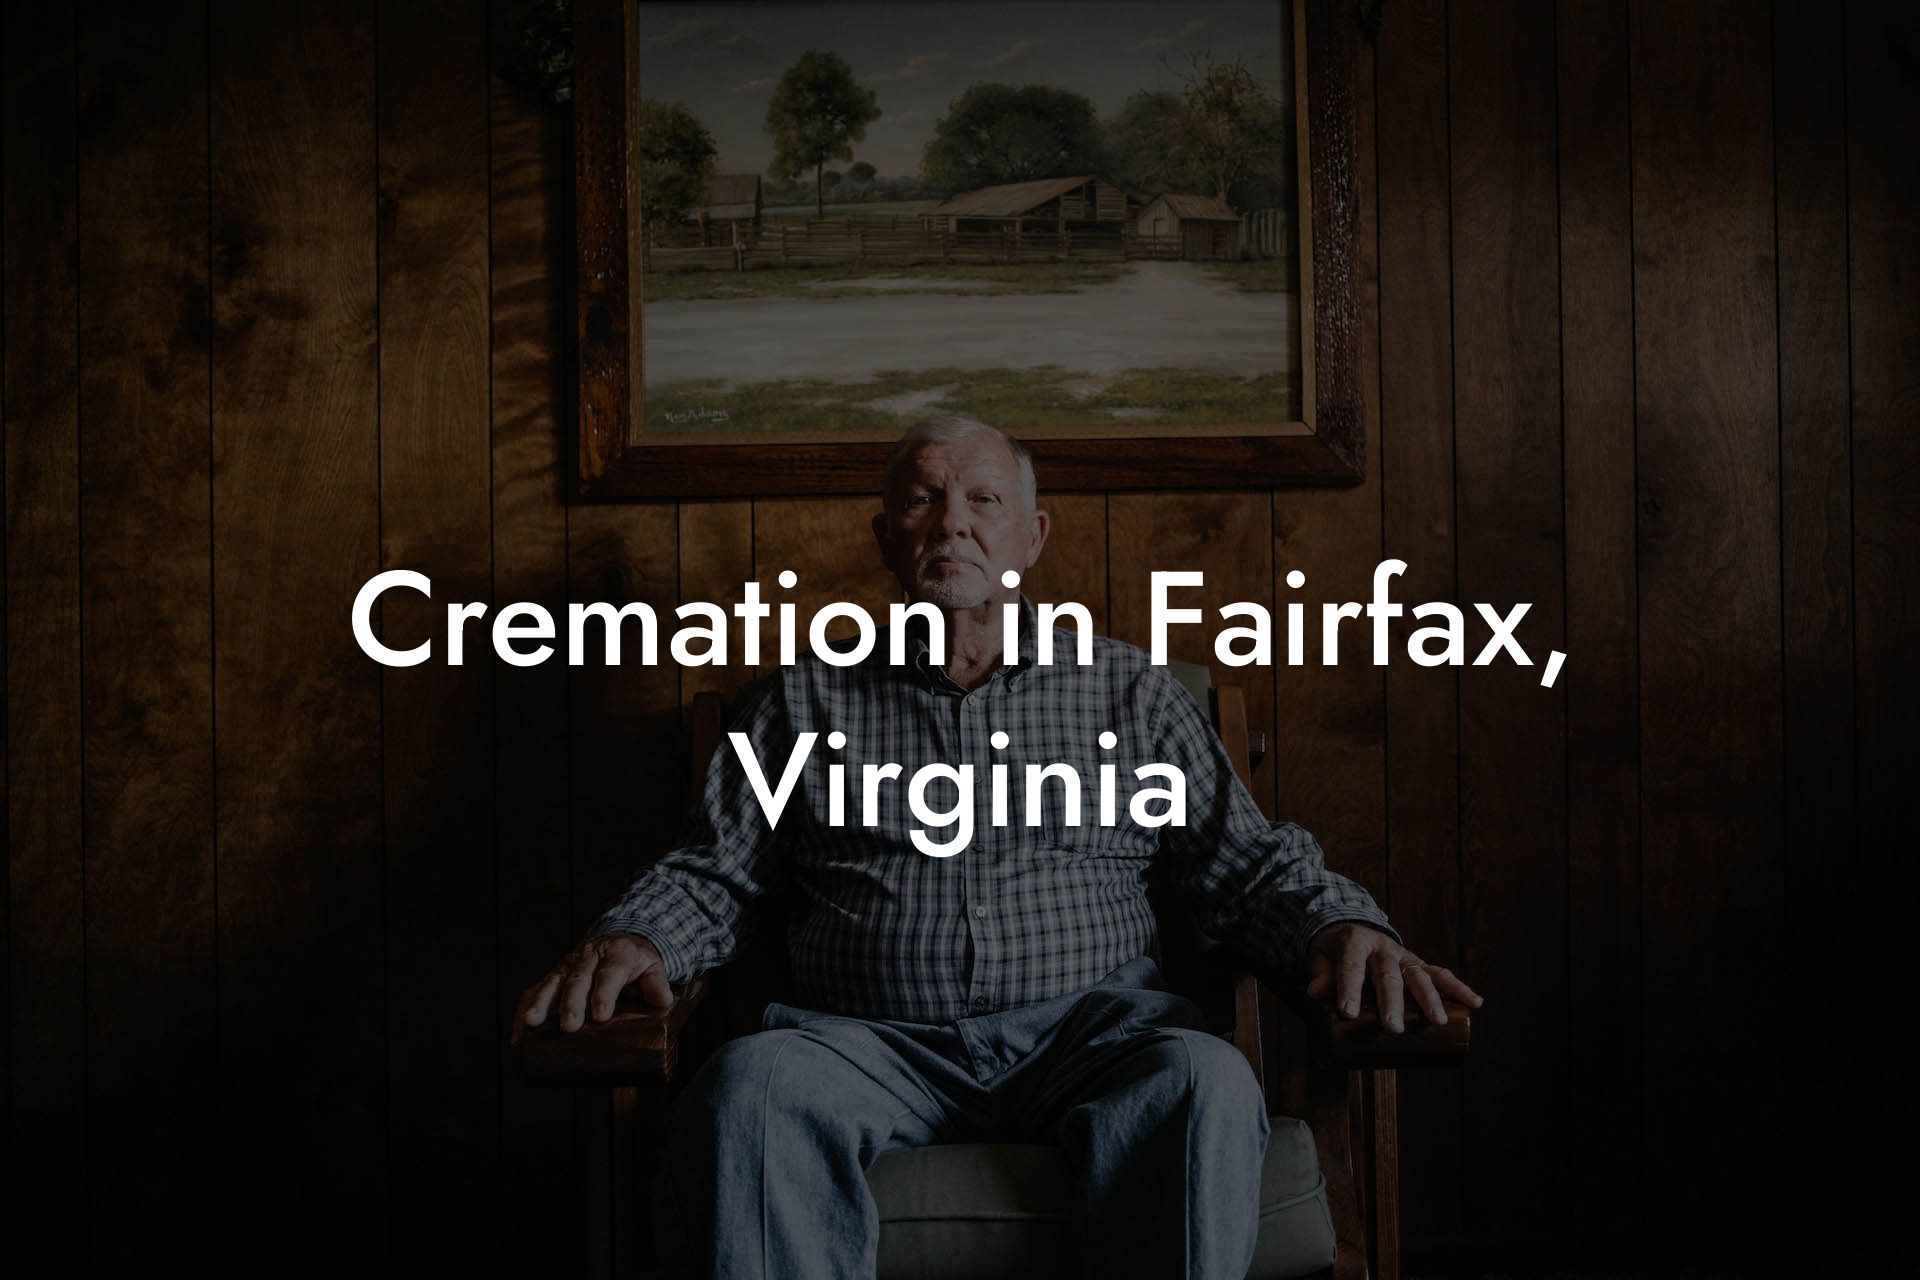 Cremation in Fairfax, Virginia